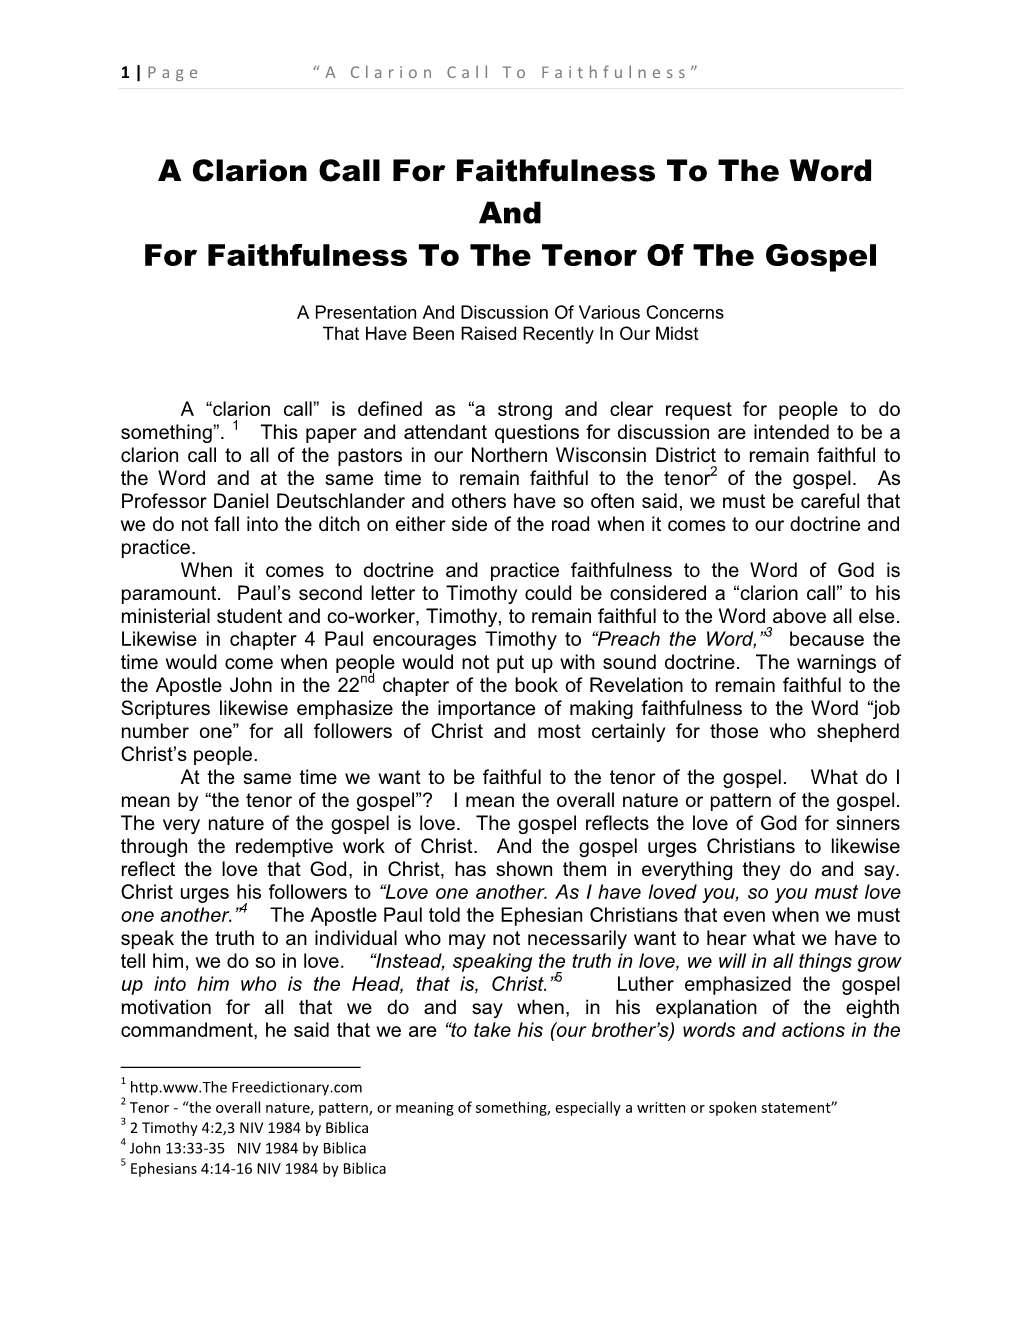 A Clarion Call to Faithfulness”